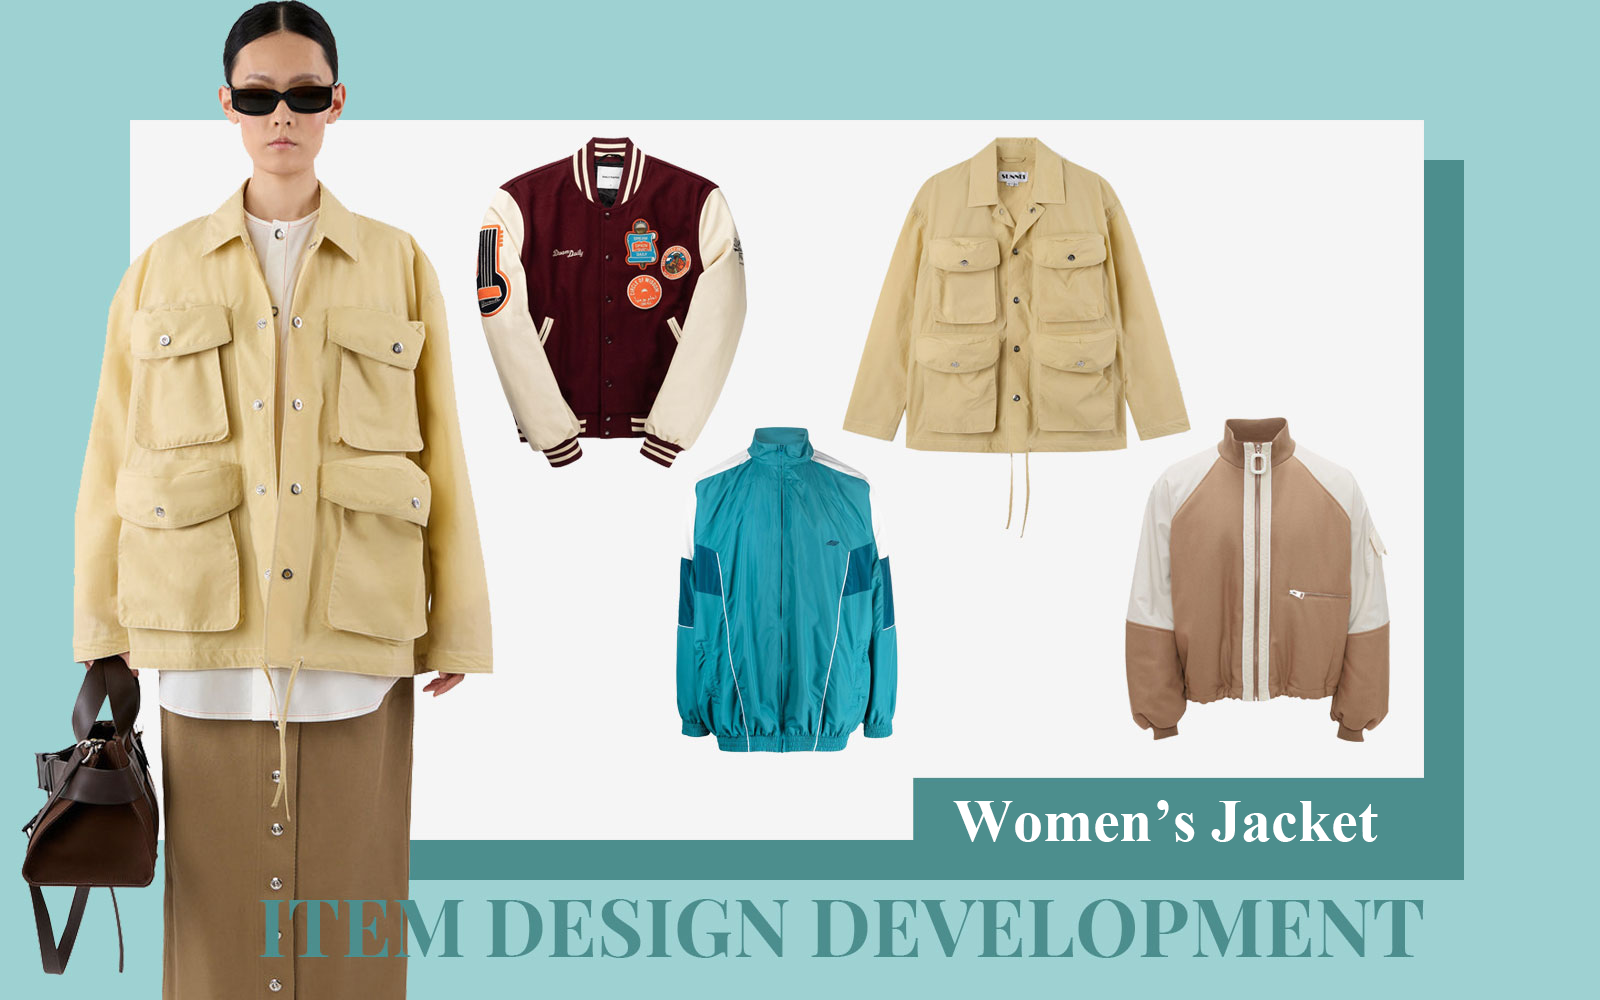 The Item Design Development of Women's Jacket